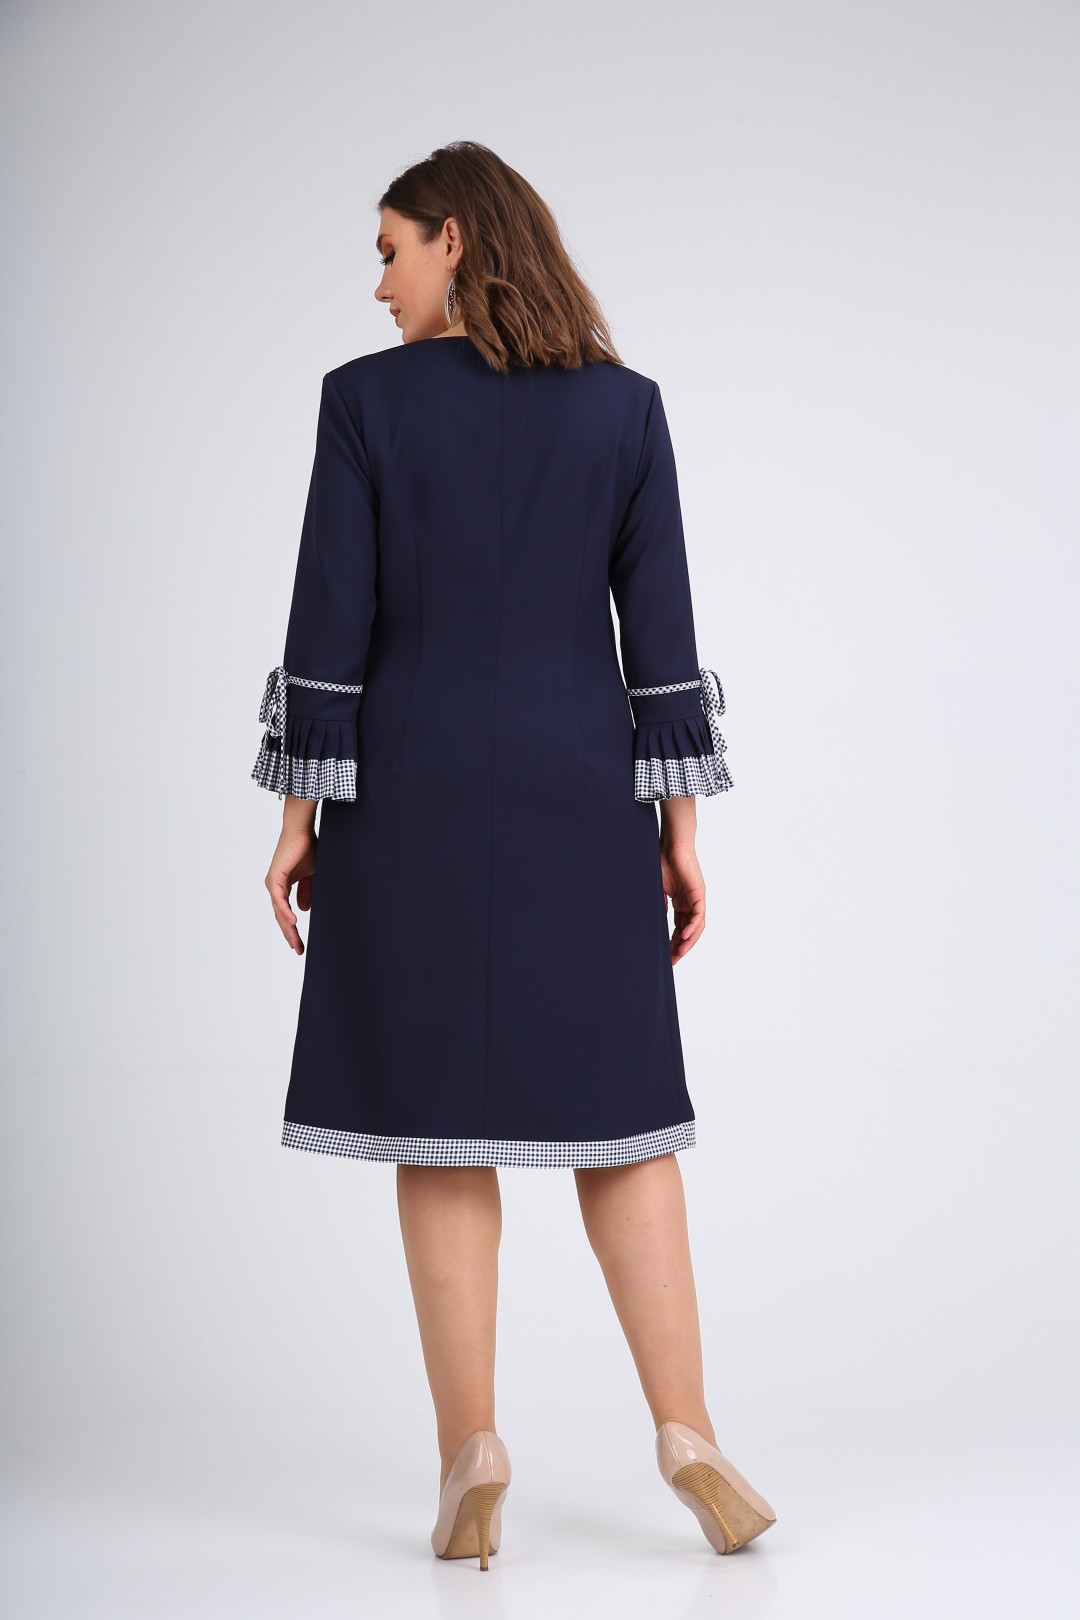 Платье Мода-Версаль 2232 т.синий